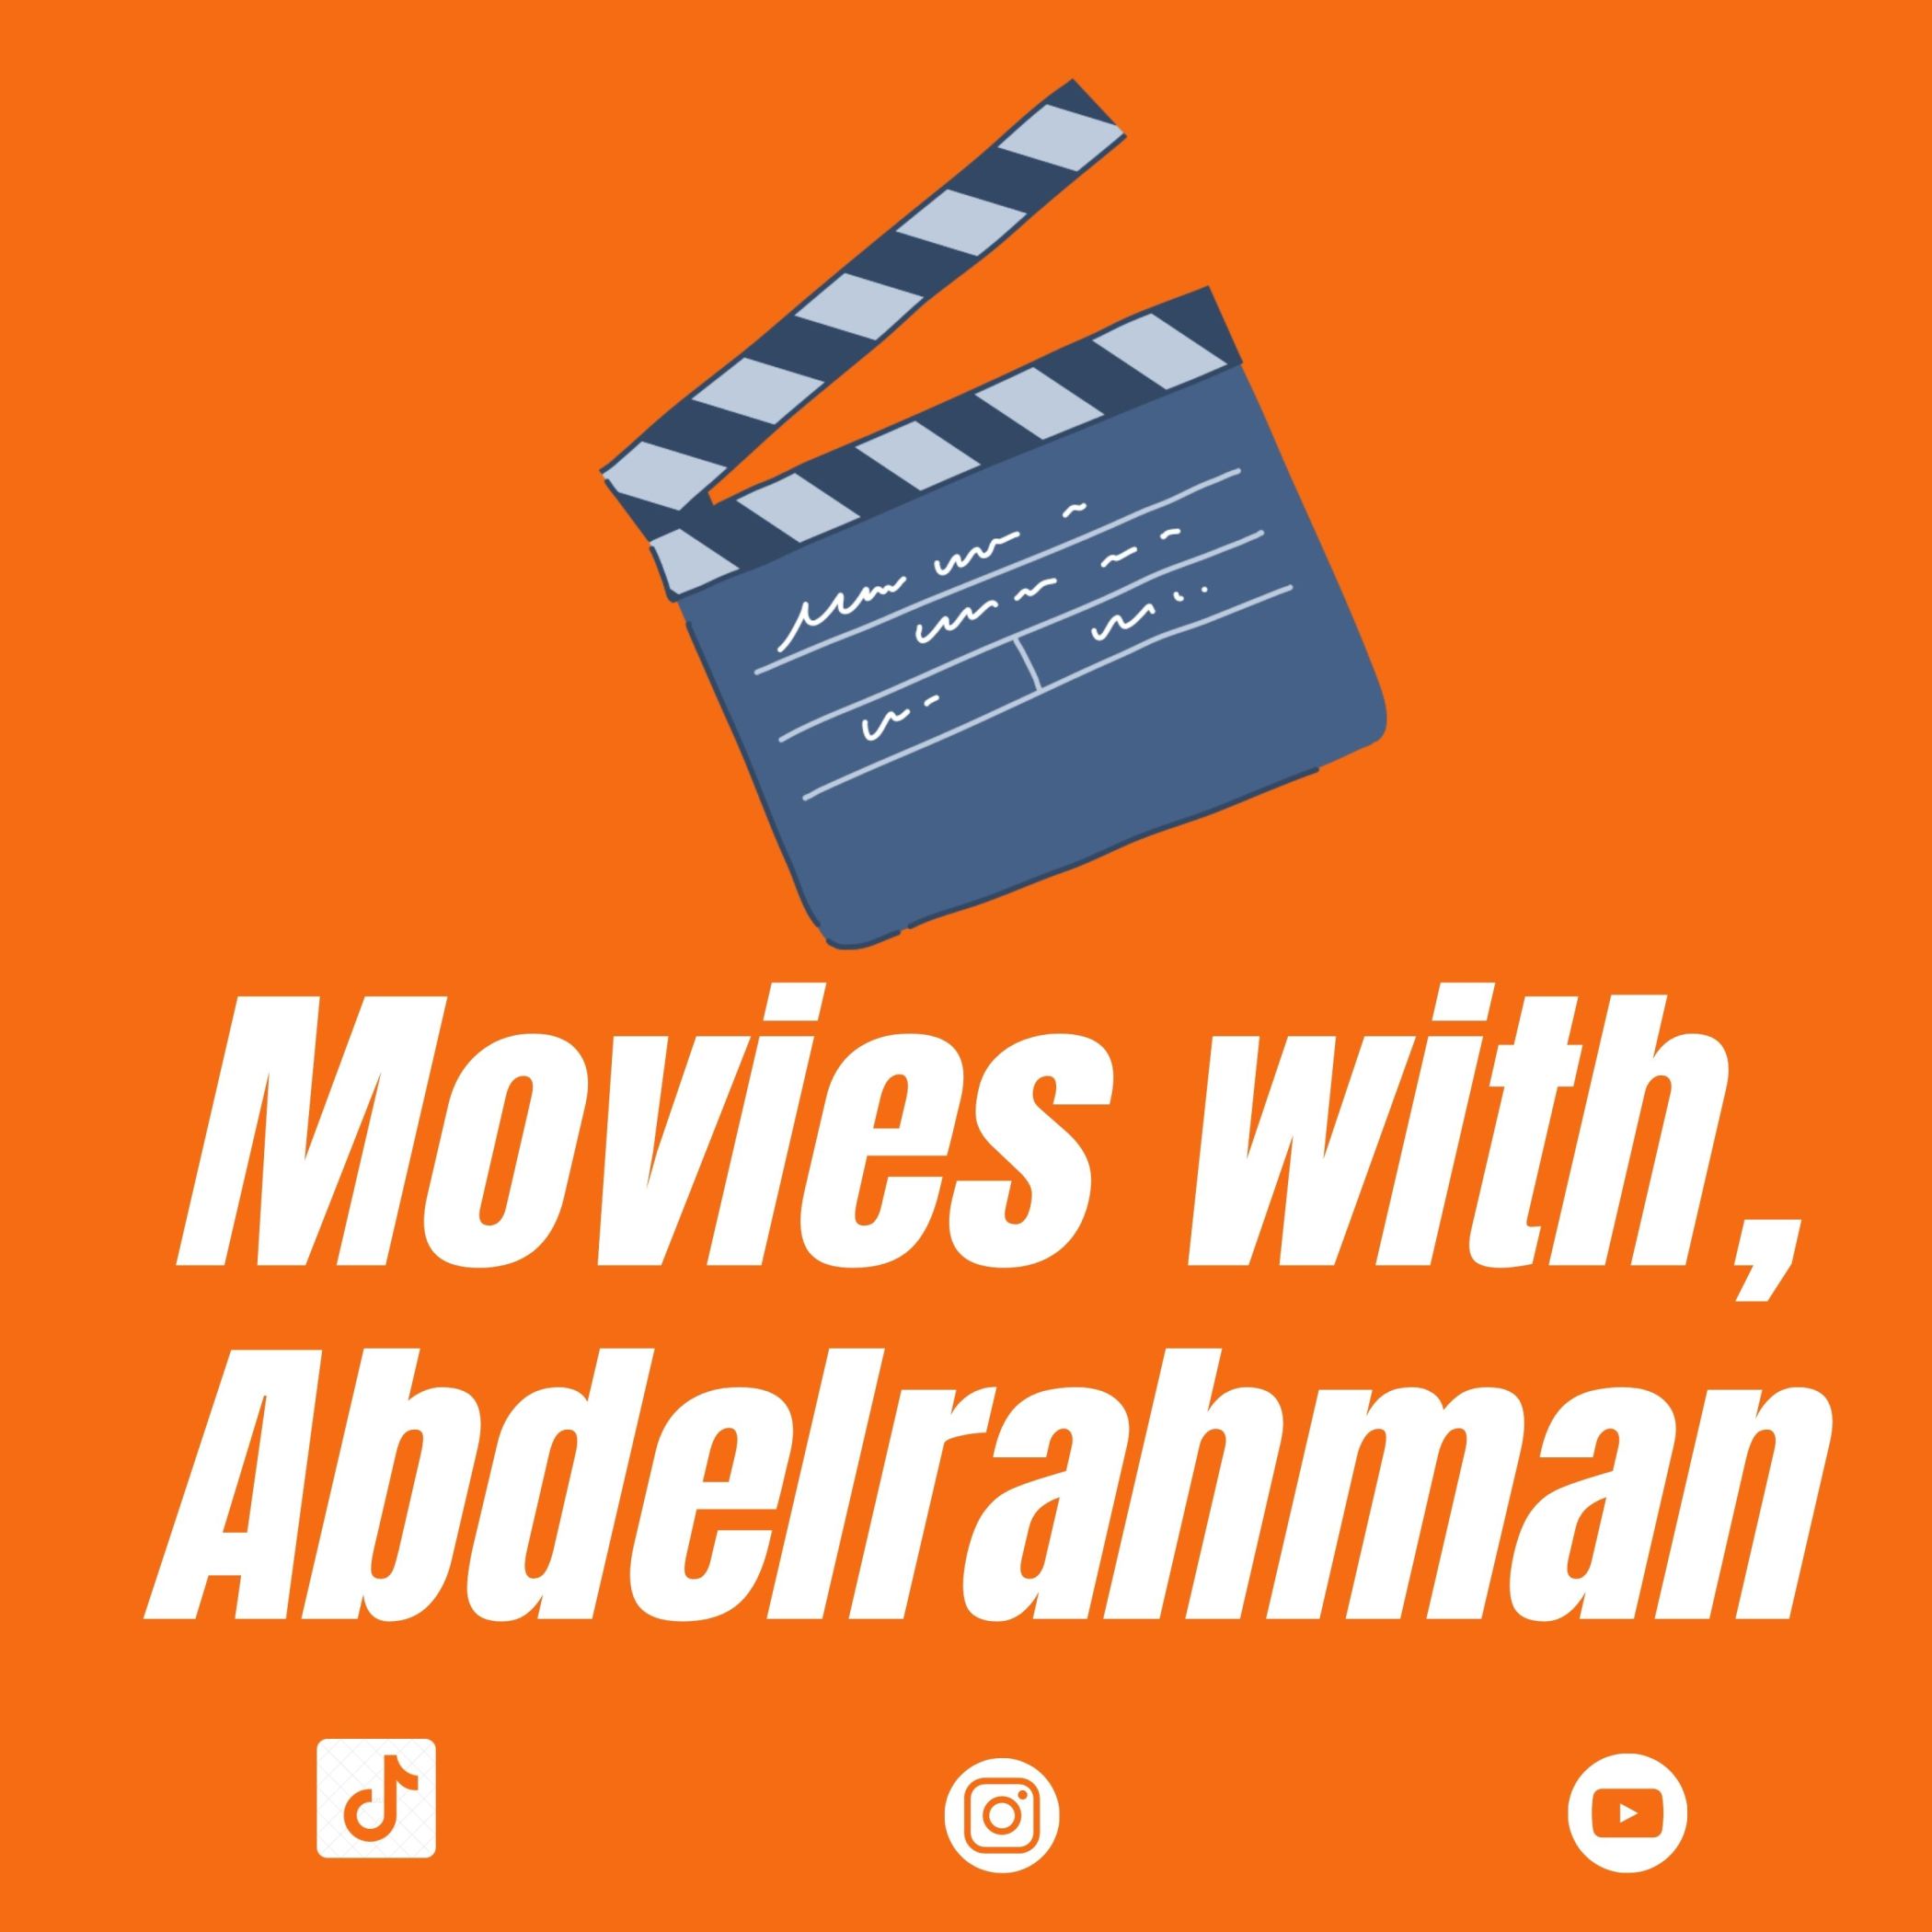 Movies with Abdelrahman